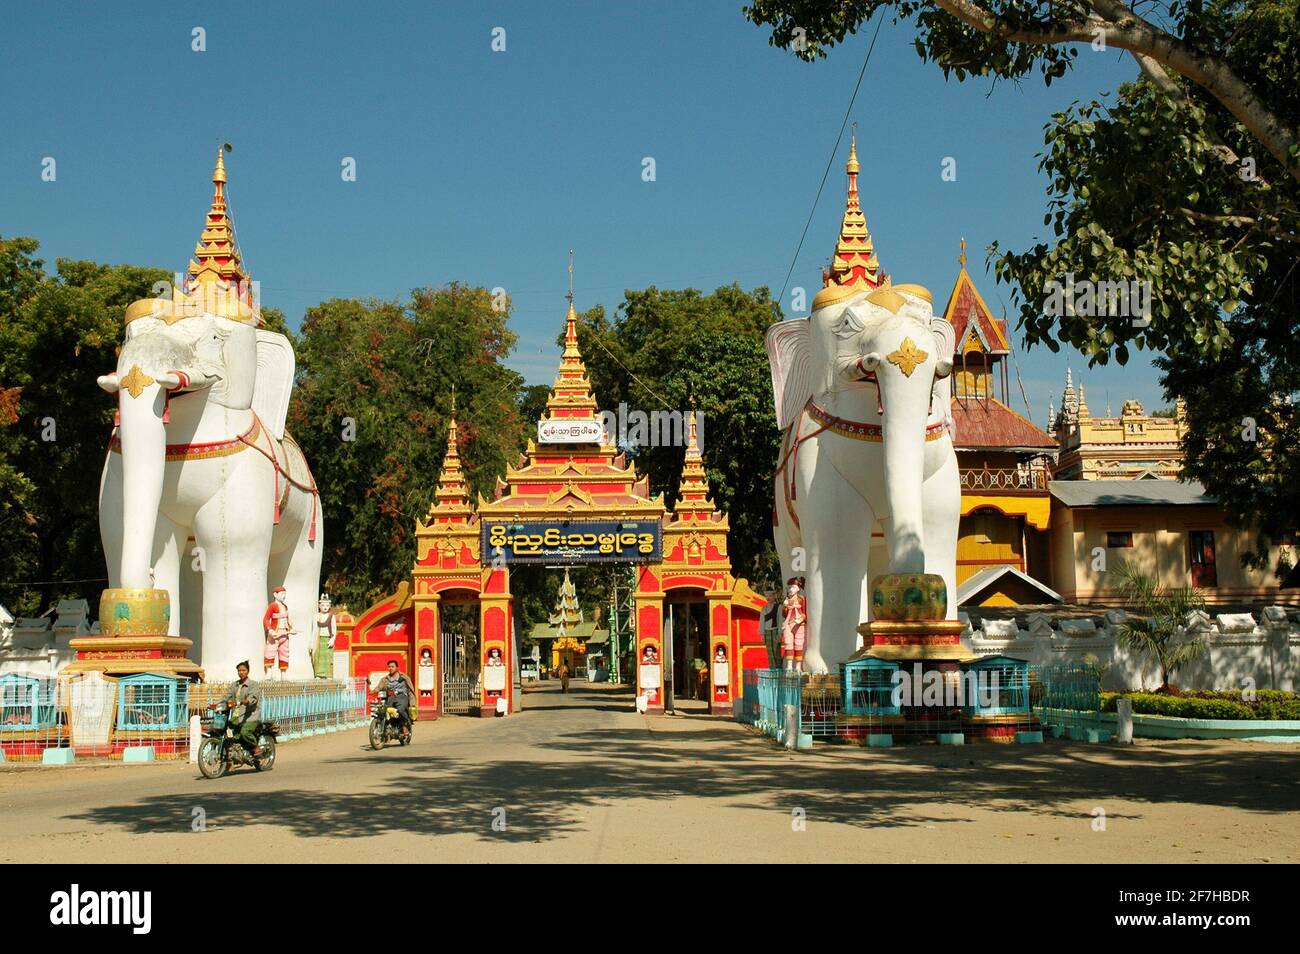 White elephants at the entrance of Thanboddhay pagoda near Monywa, Myanmar Stock Photo